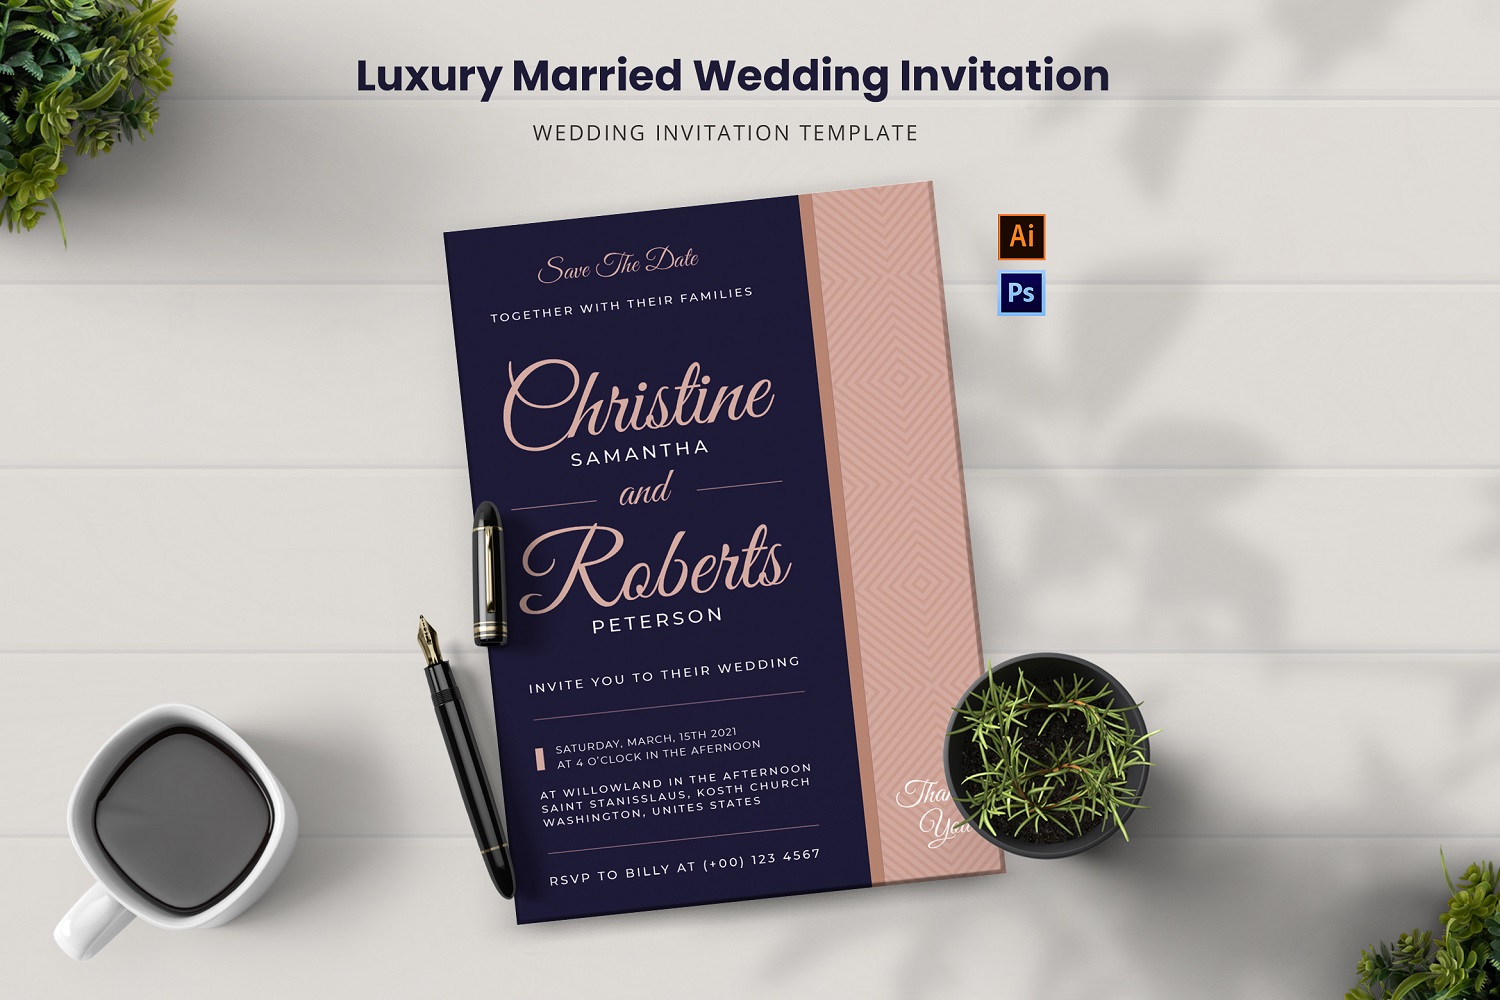 Luxury Married Wedding Invitation